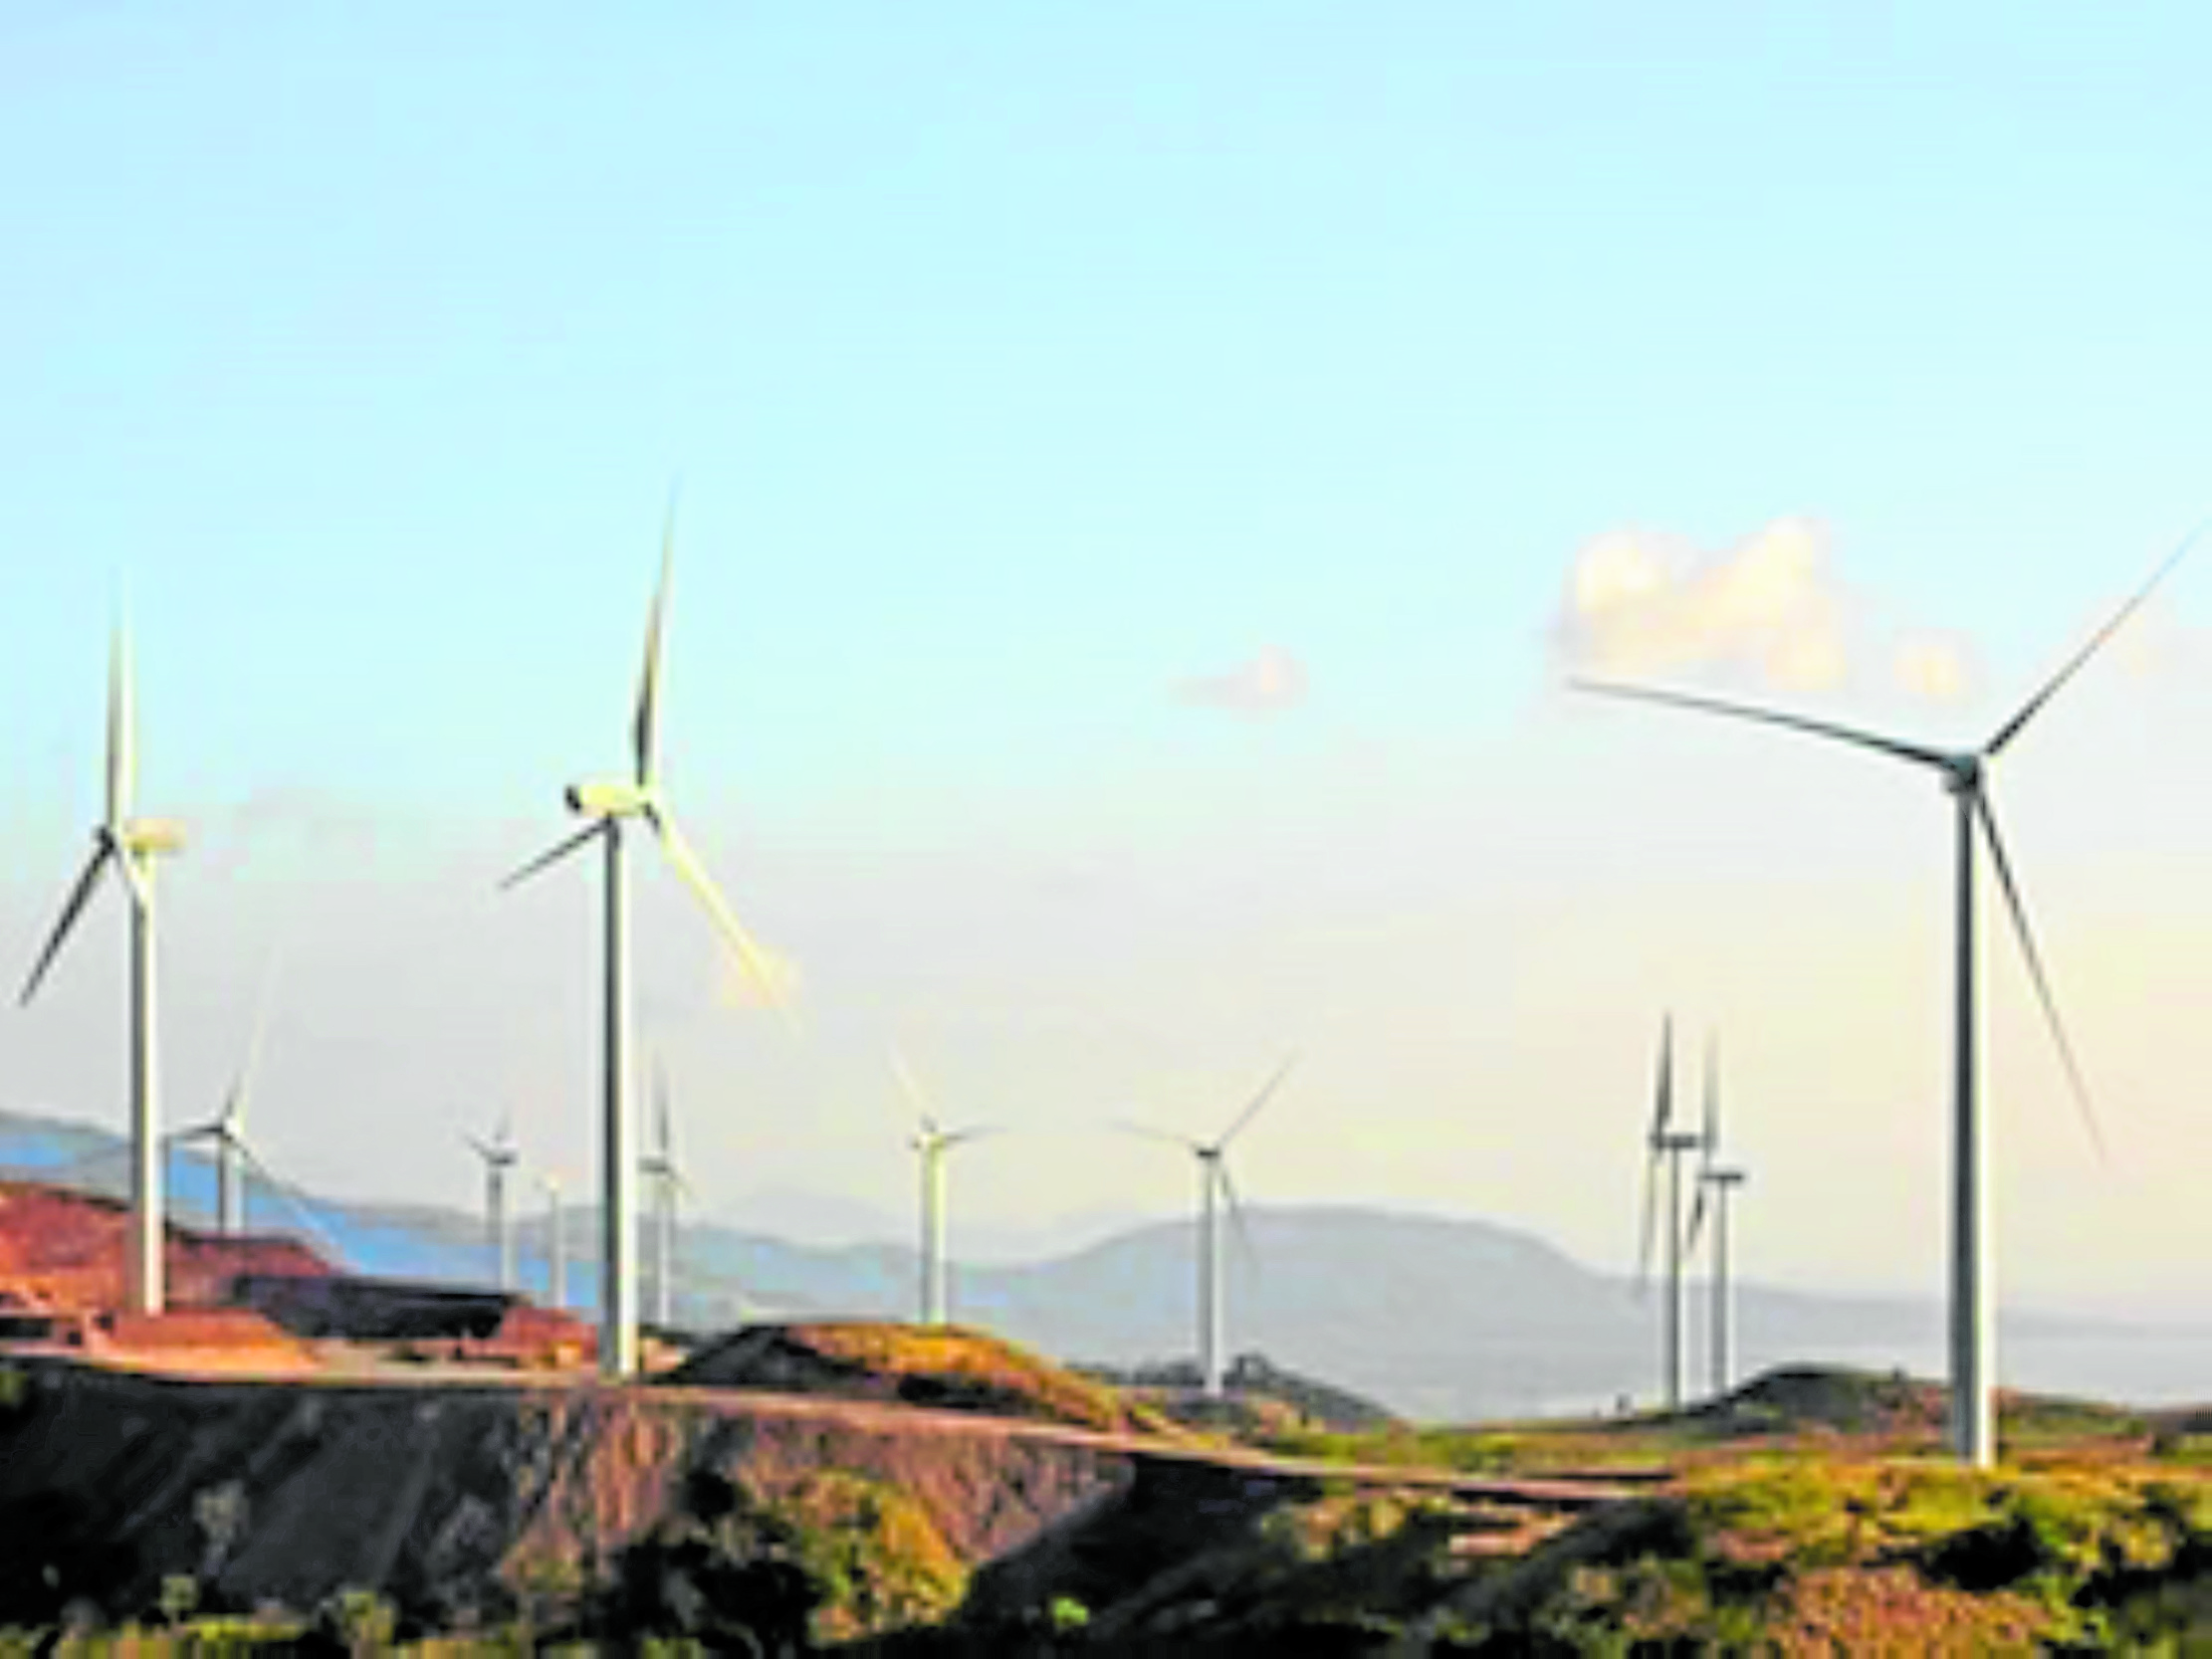 Alternergy currently operates the 54-megawatt Pililla wind farm in Rizal province.